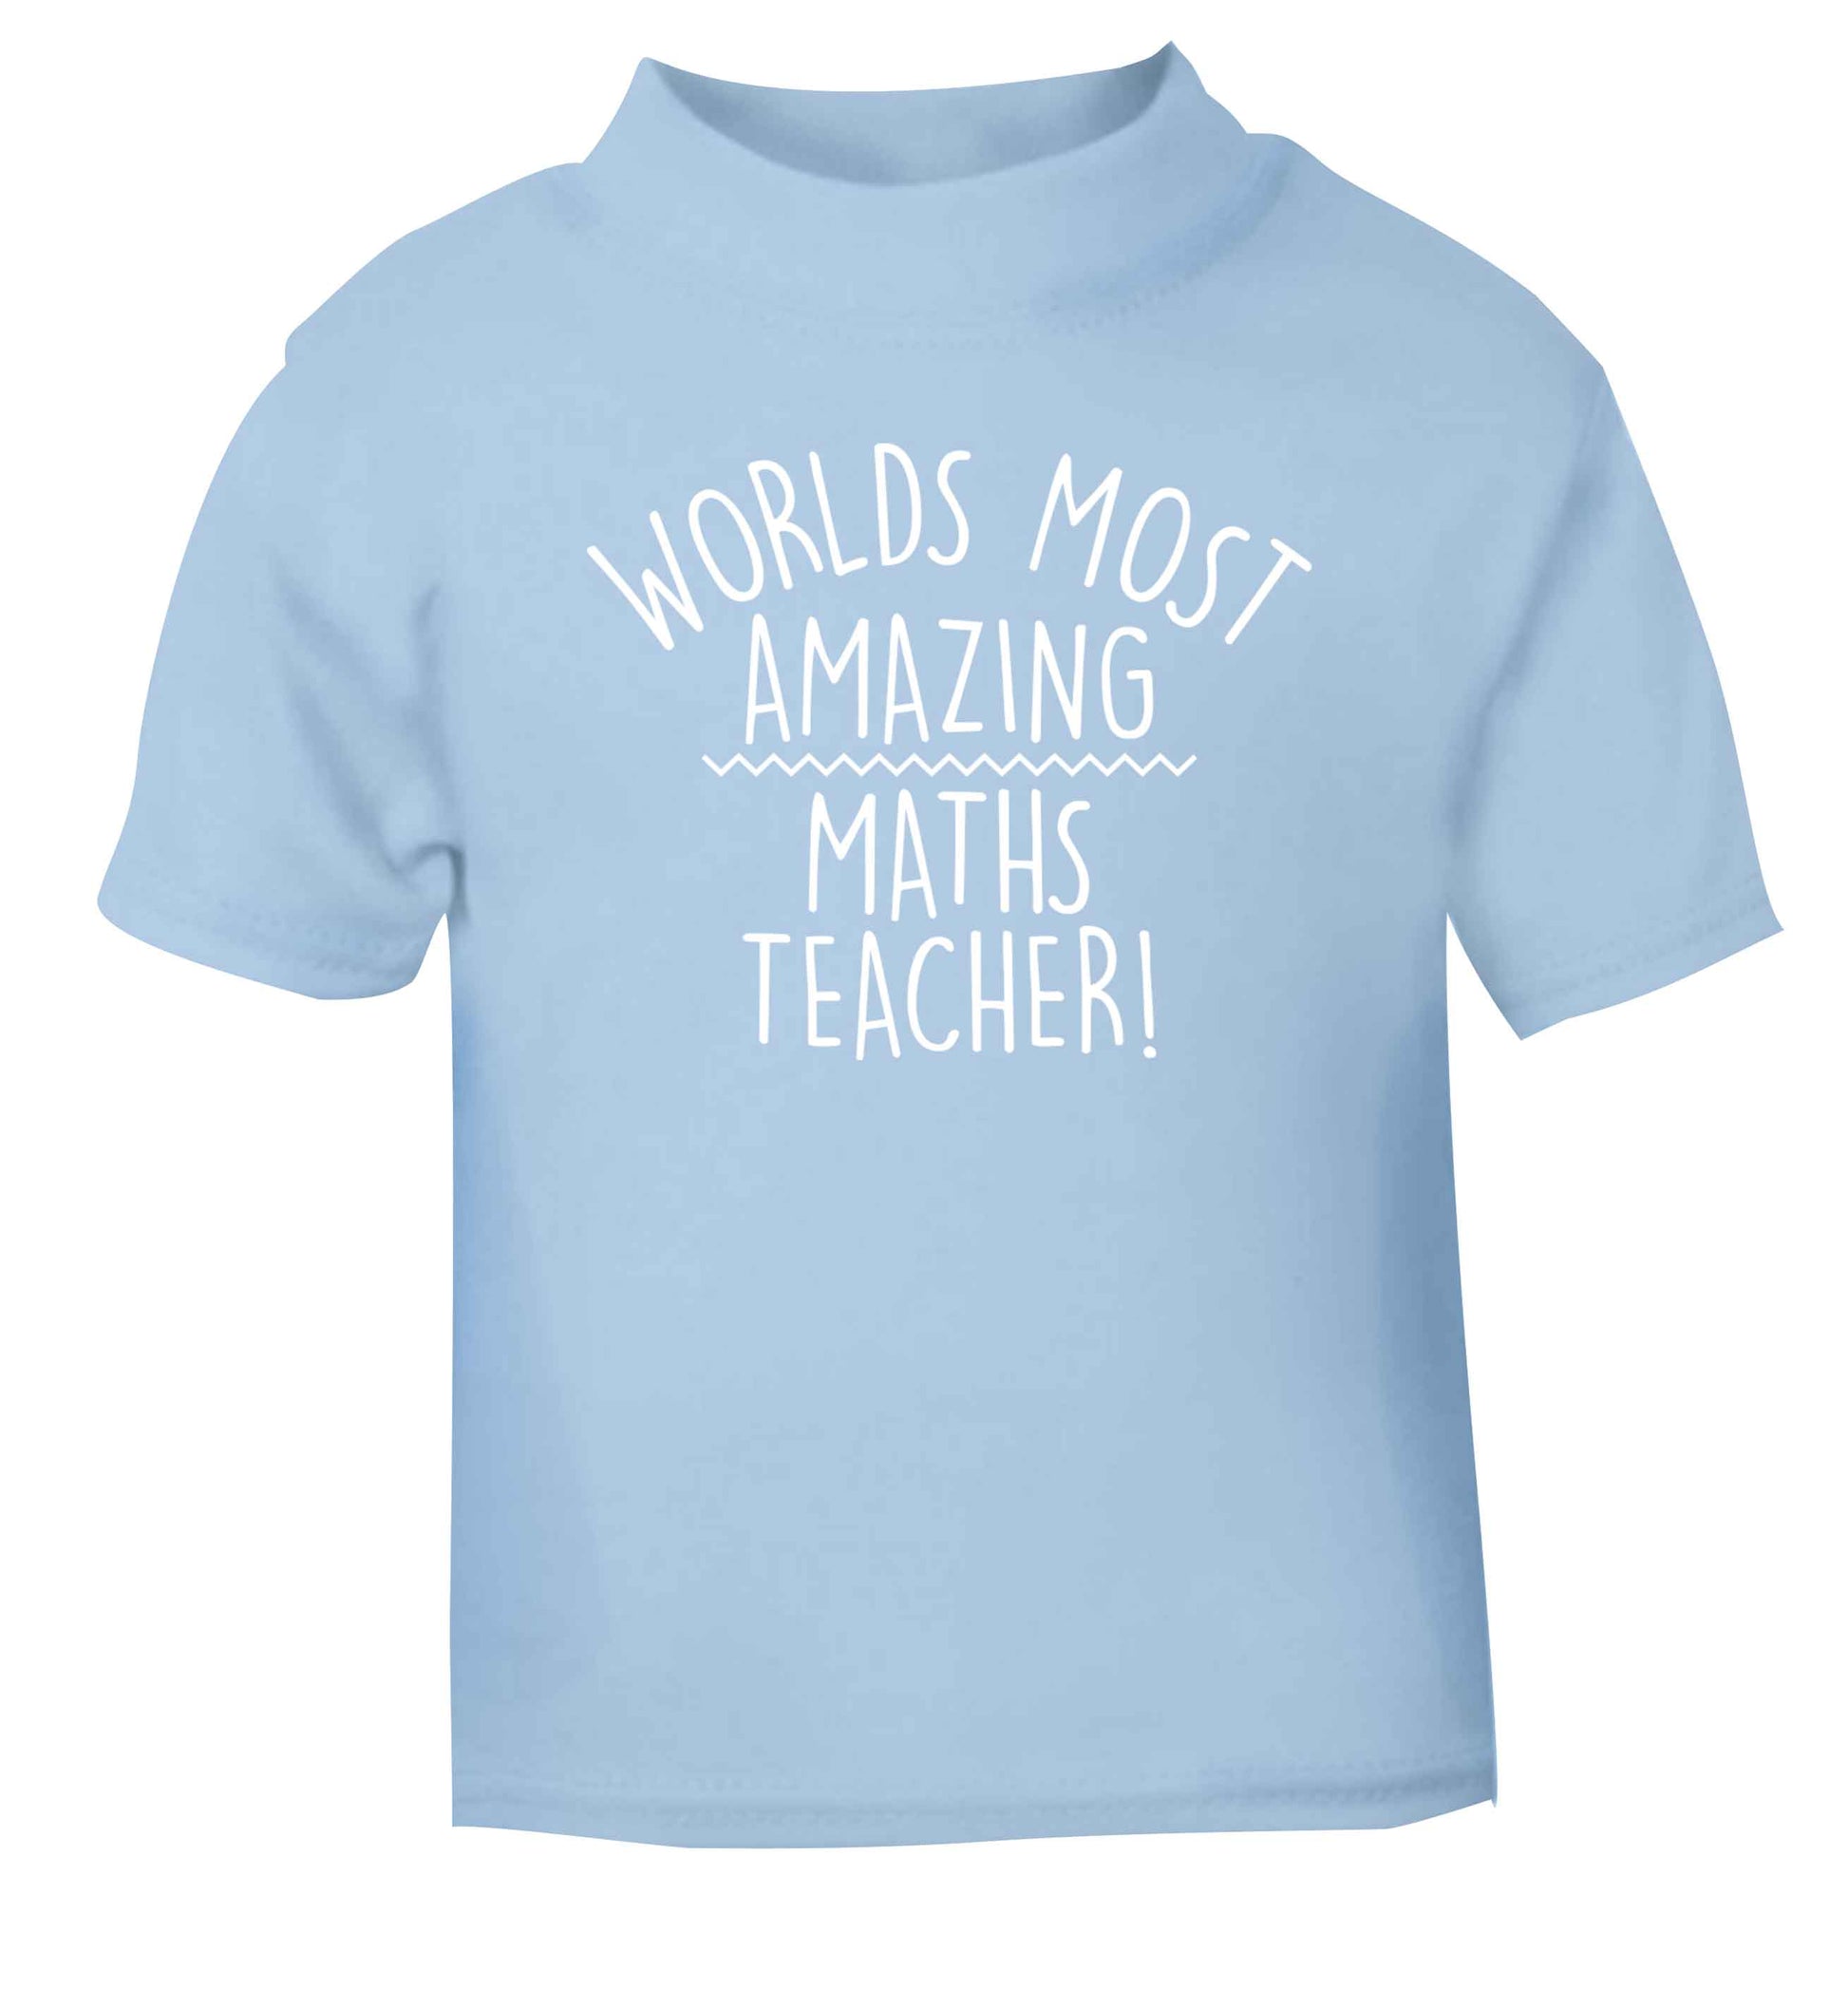 Worlds most amazing maths teacher light blue baby toddler Tshirt 2 Years